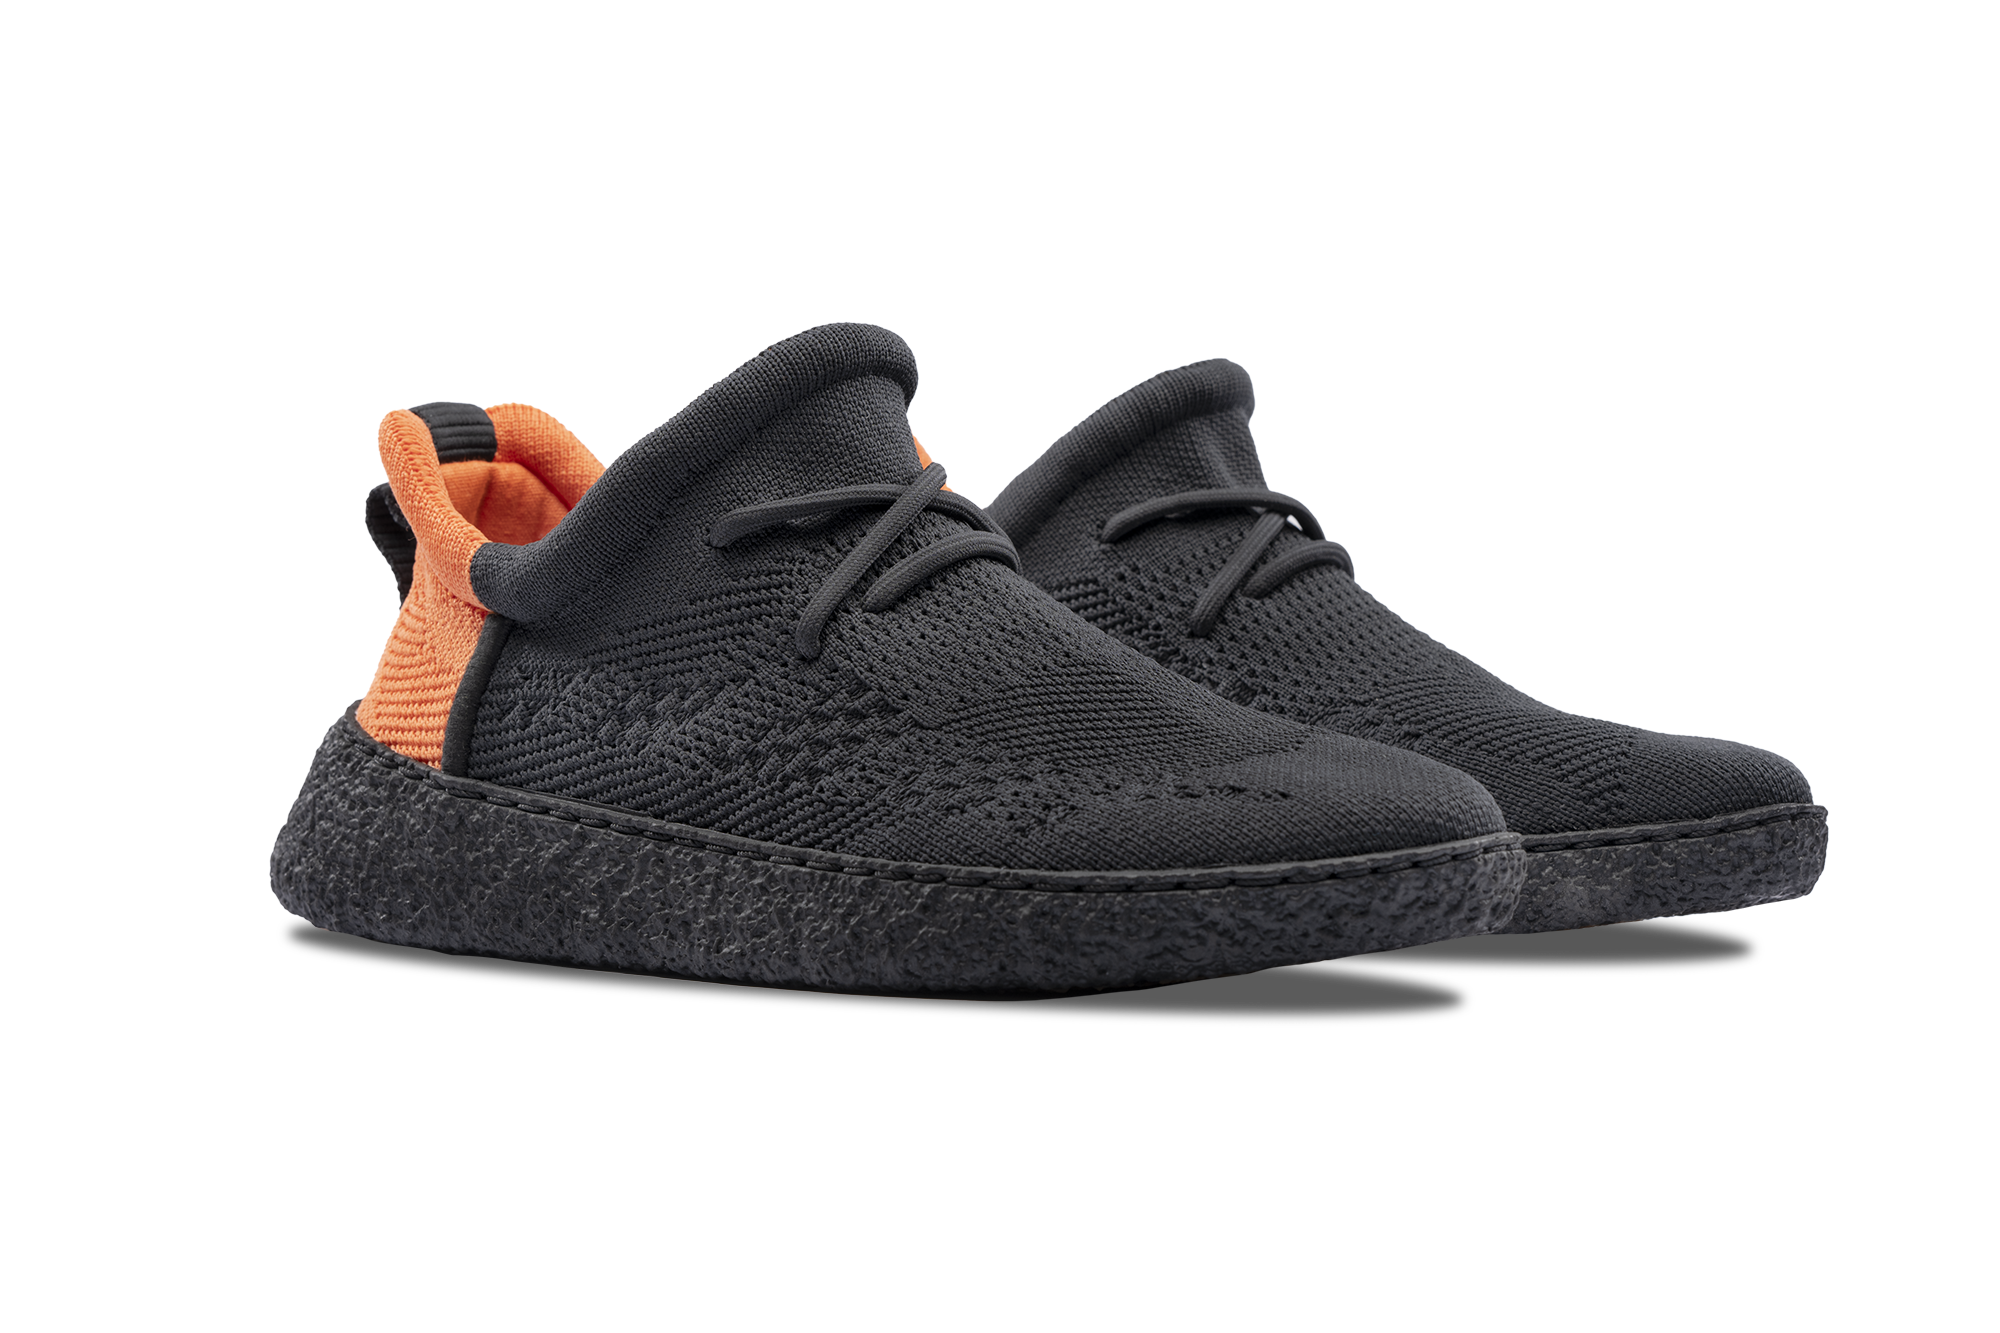 Baliston Smart Shoe Black/Orange right side view of both shoes